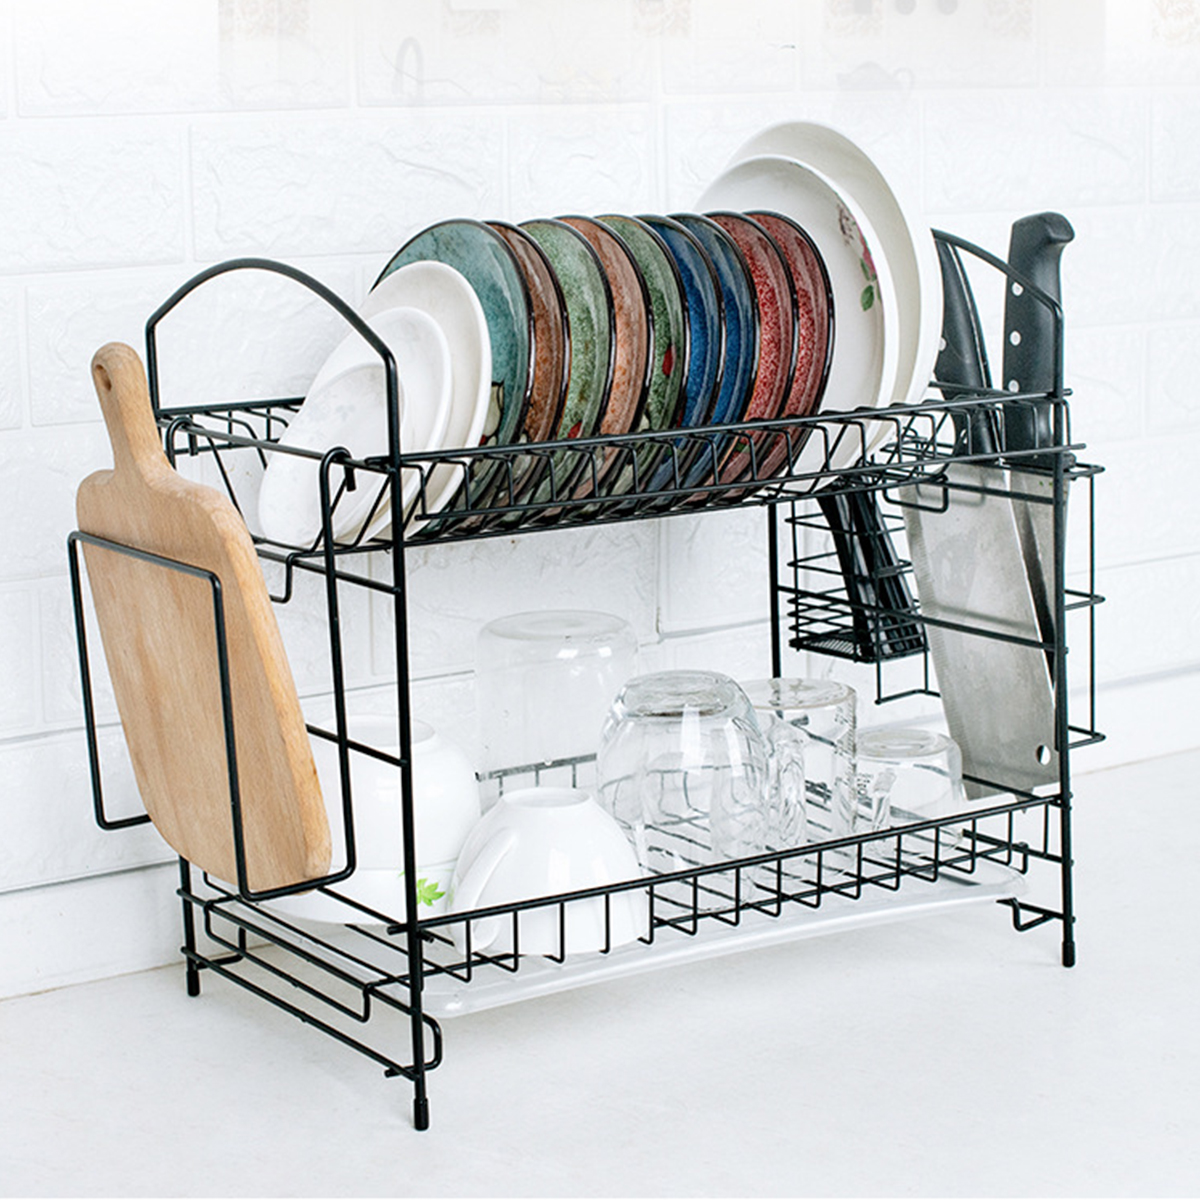 Drain rack Dish Rak Kitchen Storage Rack Organizer Mental Iron Design Easy Assemble 2 Tiers For kitchen Home Office—2